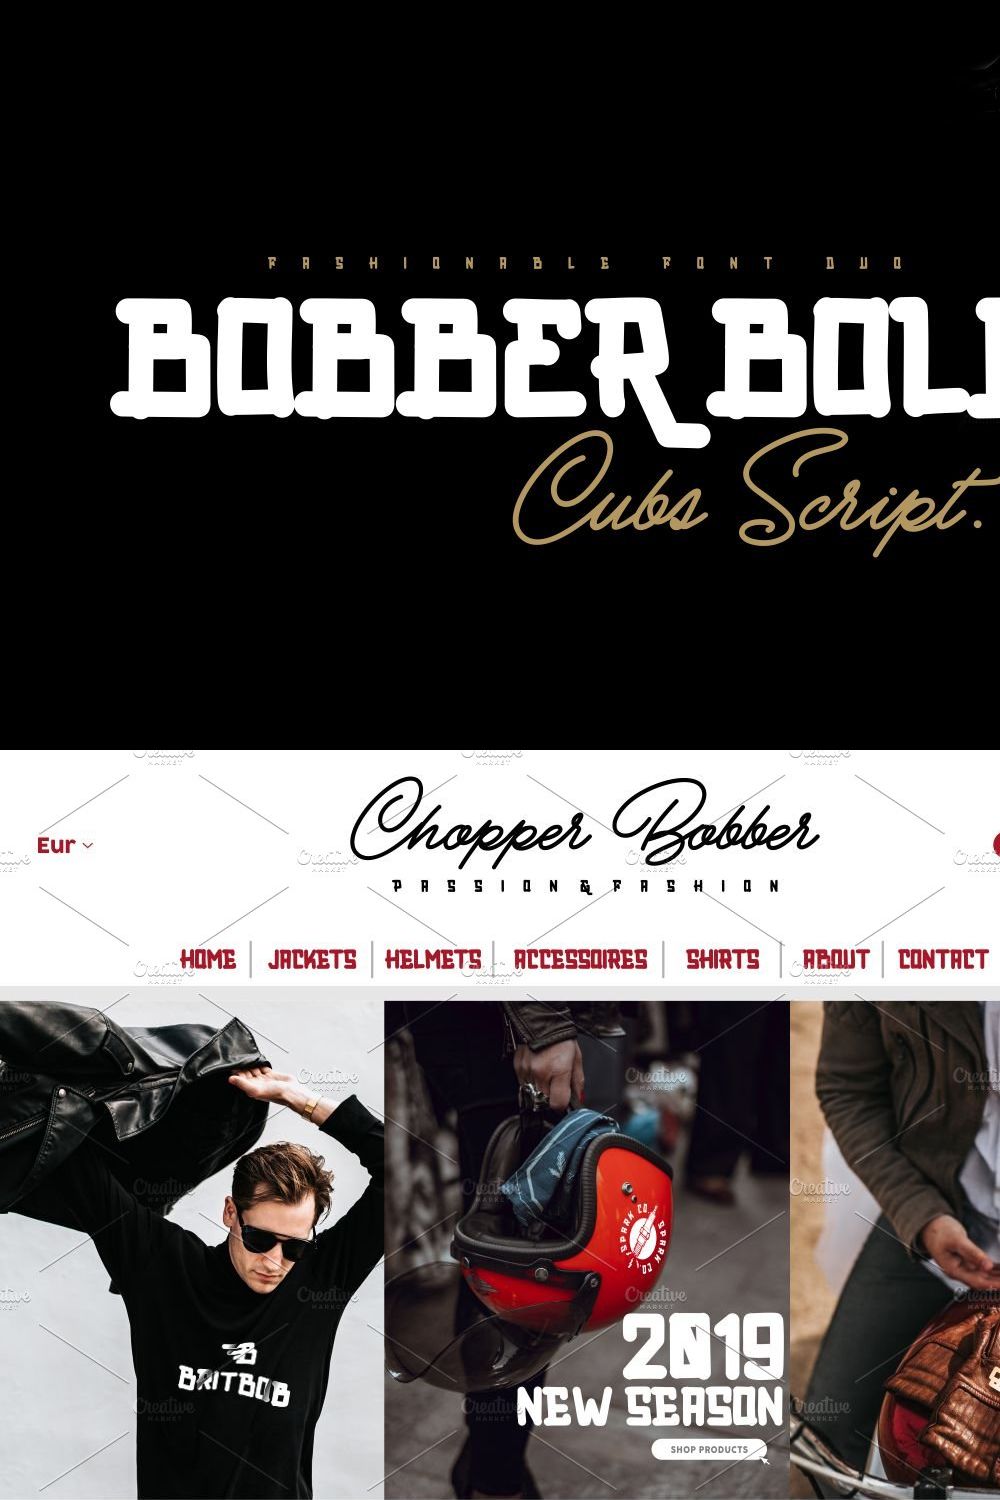 BOBBER BOLD & Cubs Script (FONT DUO) pinterest preview image.